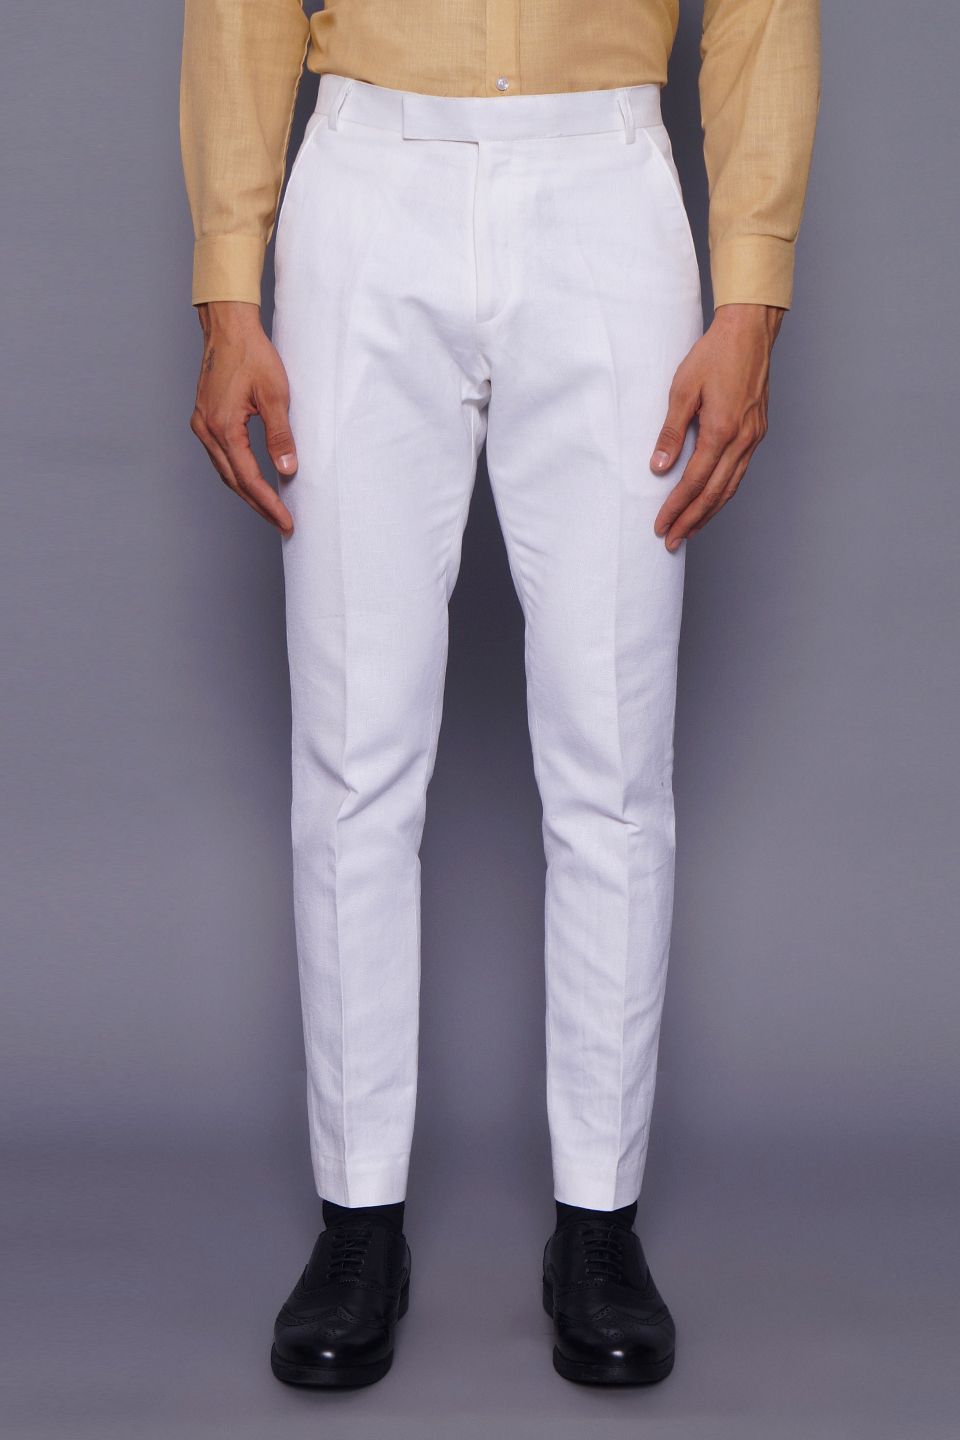 Wintage Men's Sky White Regular Fit Pant 100% Linen 